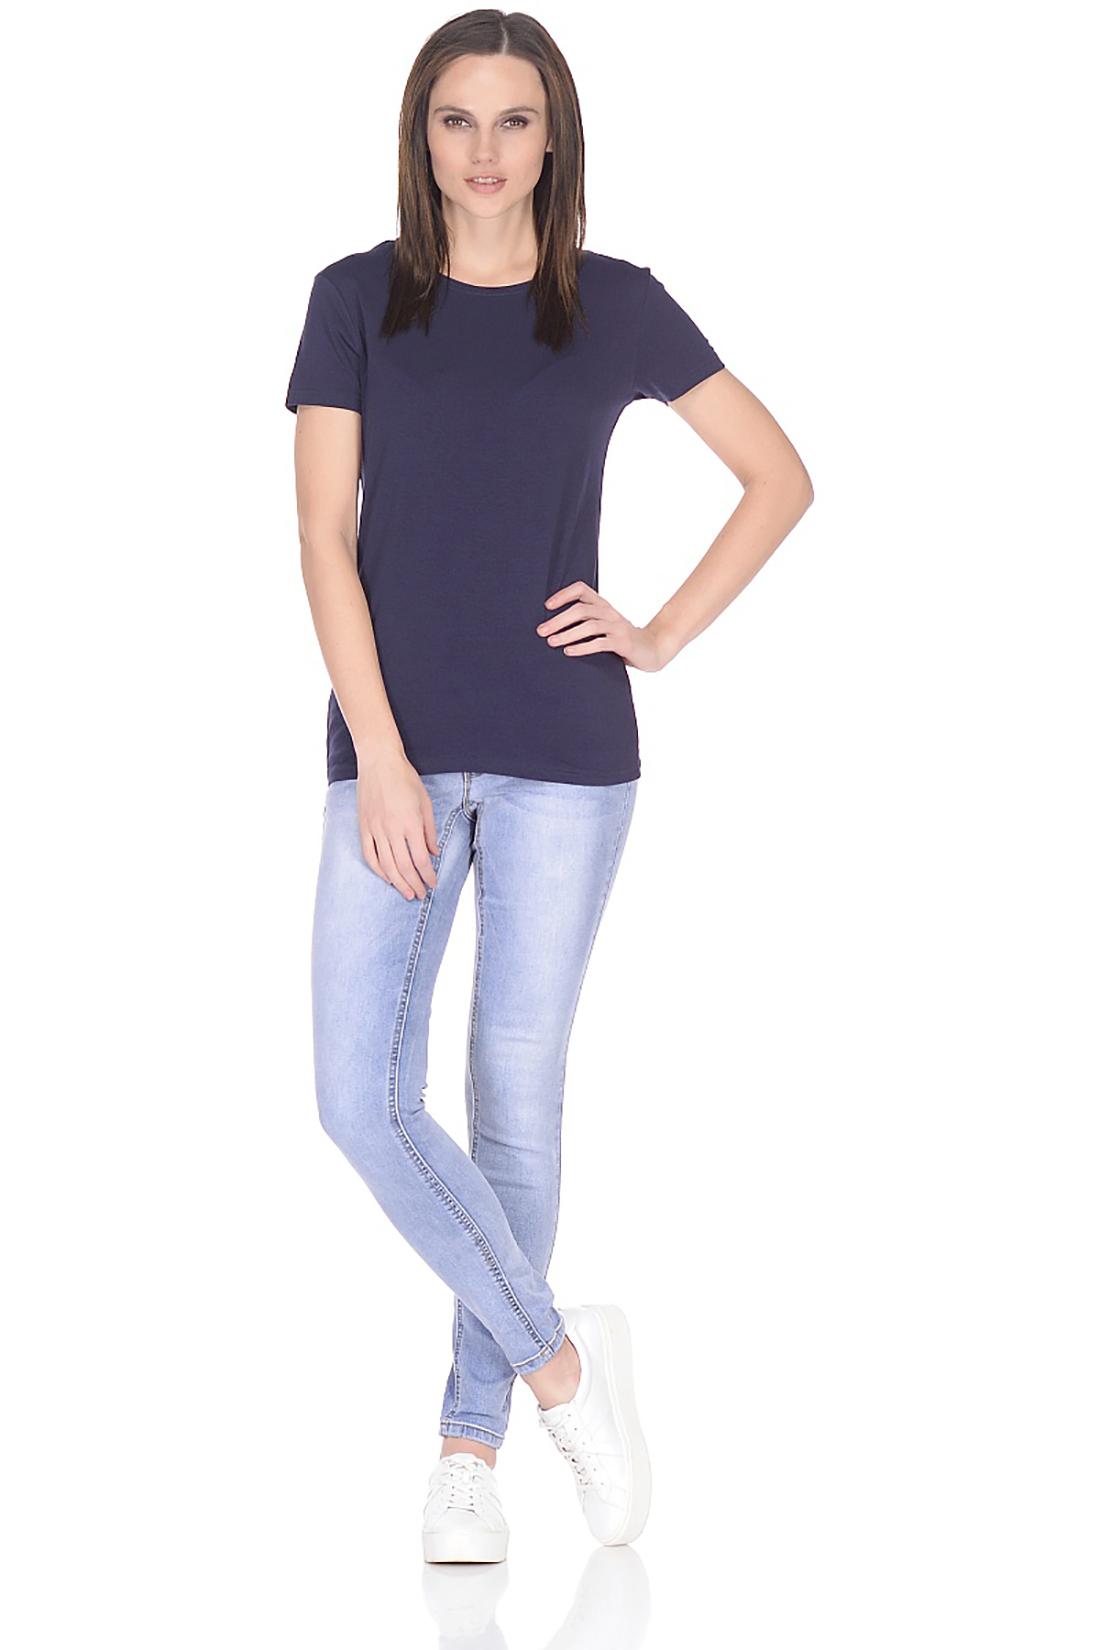 Базовая футболка (арт. baon B238201), размер L, цвет синий Базовая футболка (арт. baon B238201) - фото 3